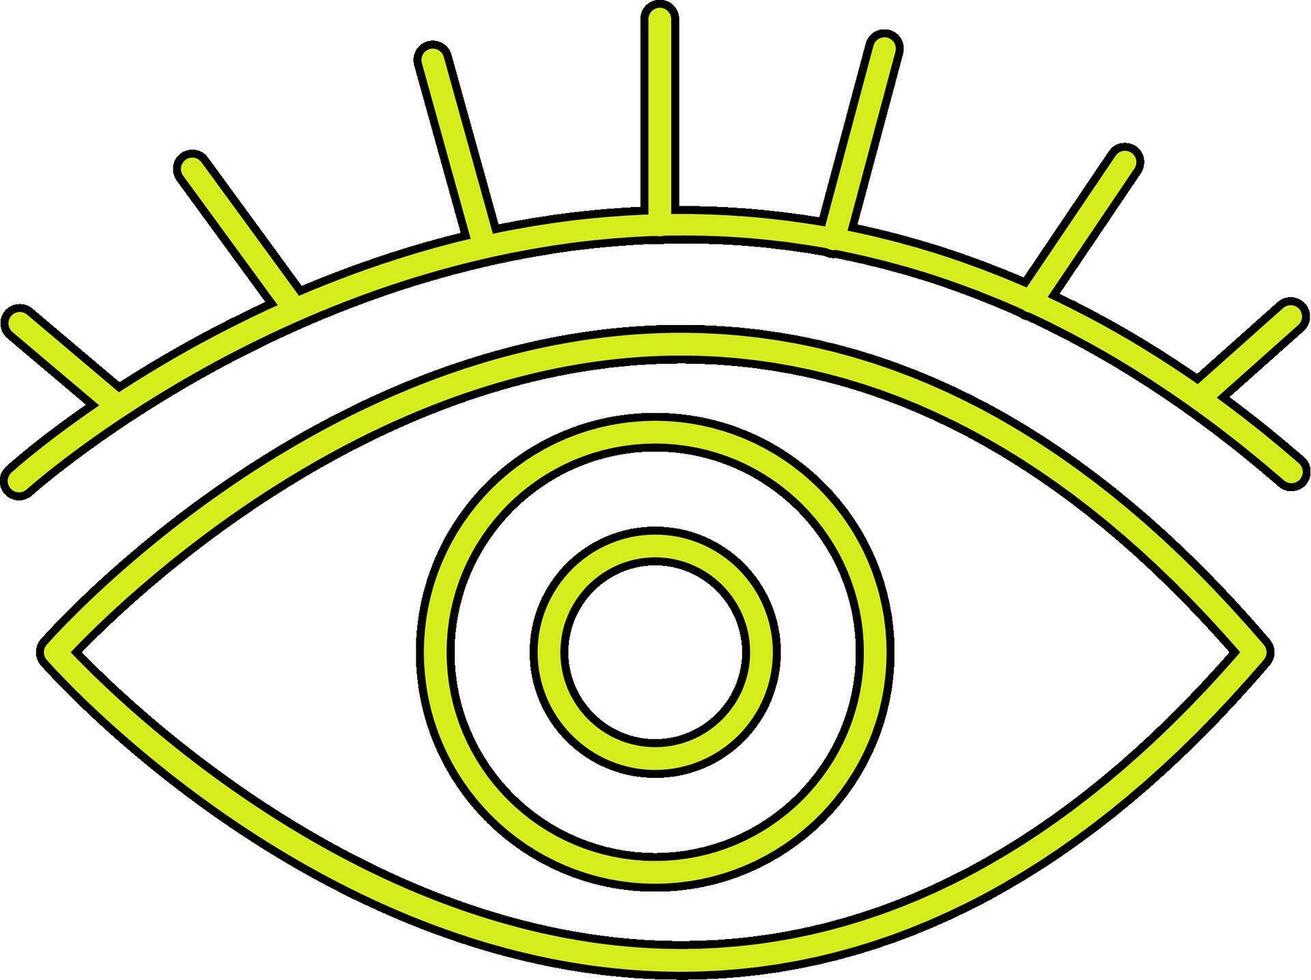 Auge vecto Symbol vektor